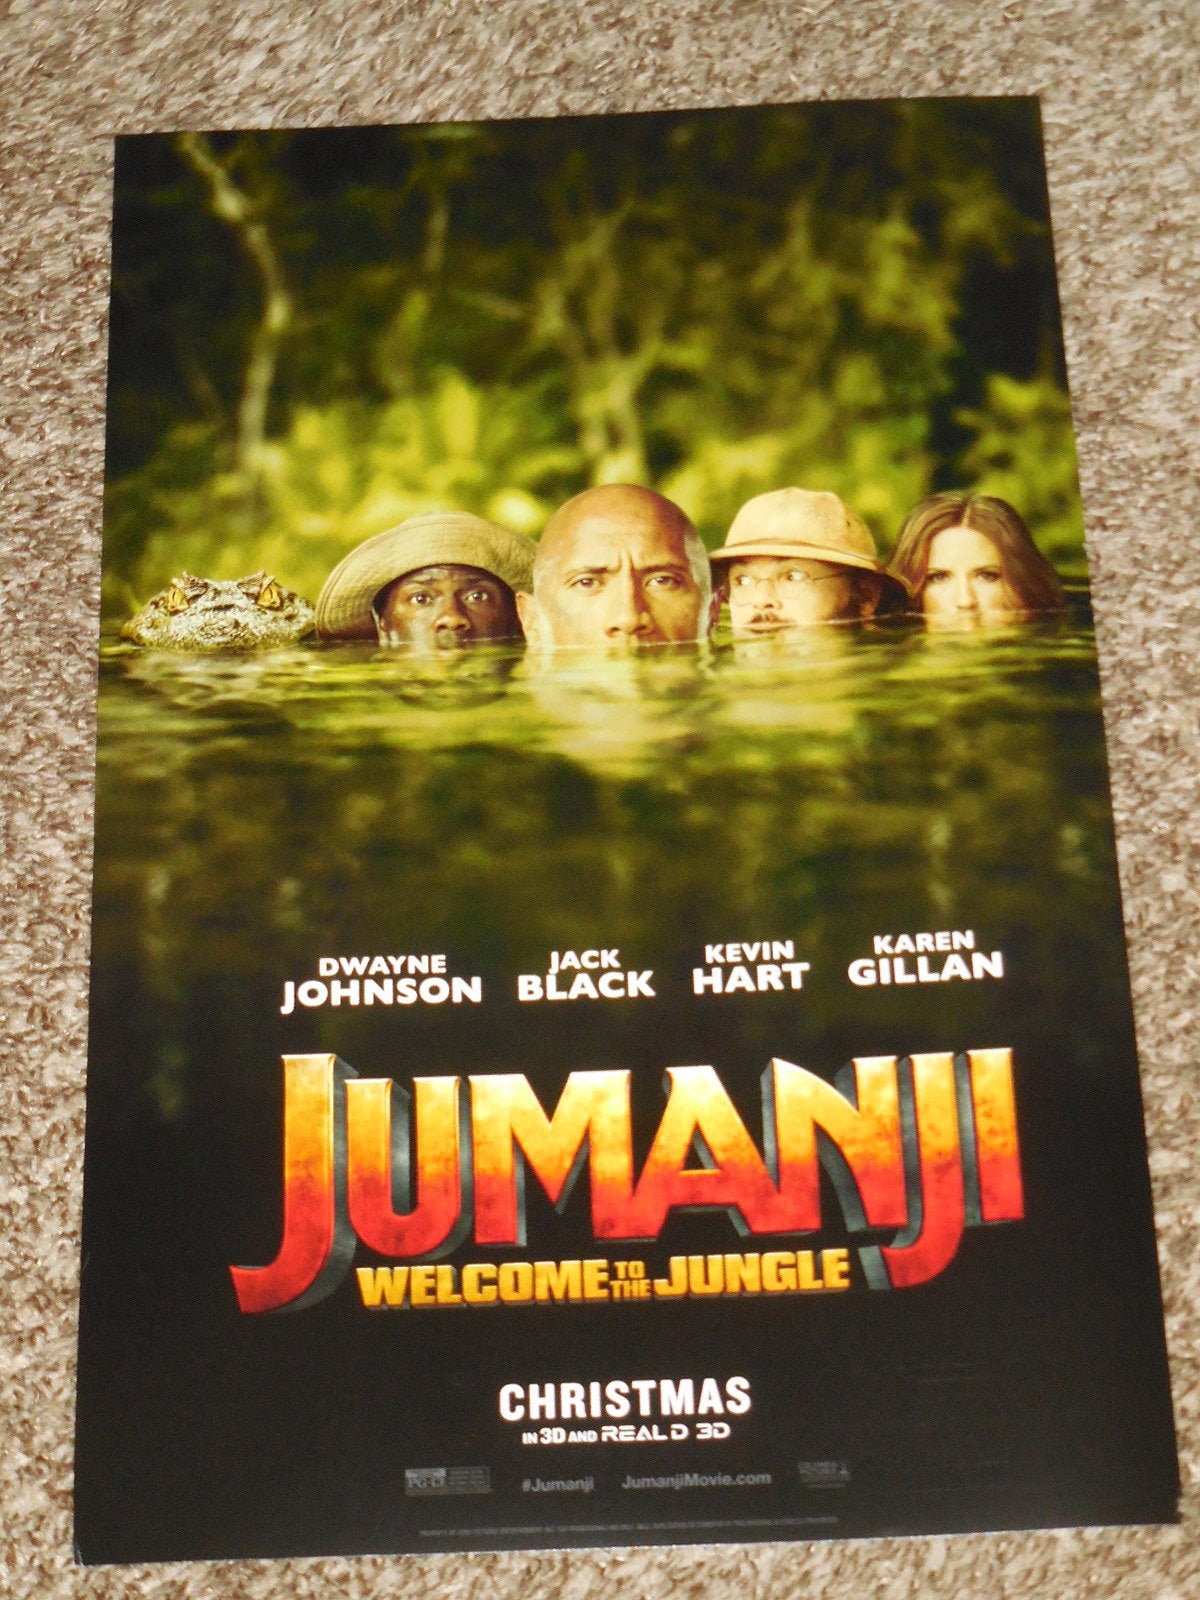 3 Reasons Jumanji: Welcome to the Jungle Is a Spiritual